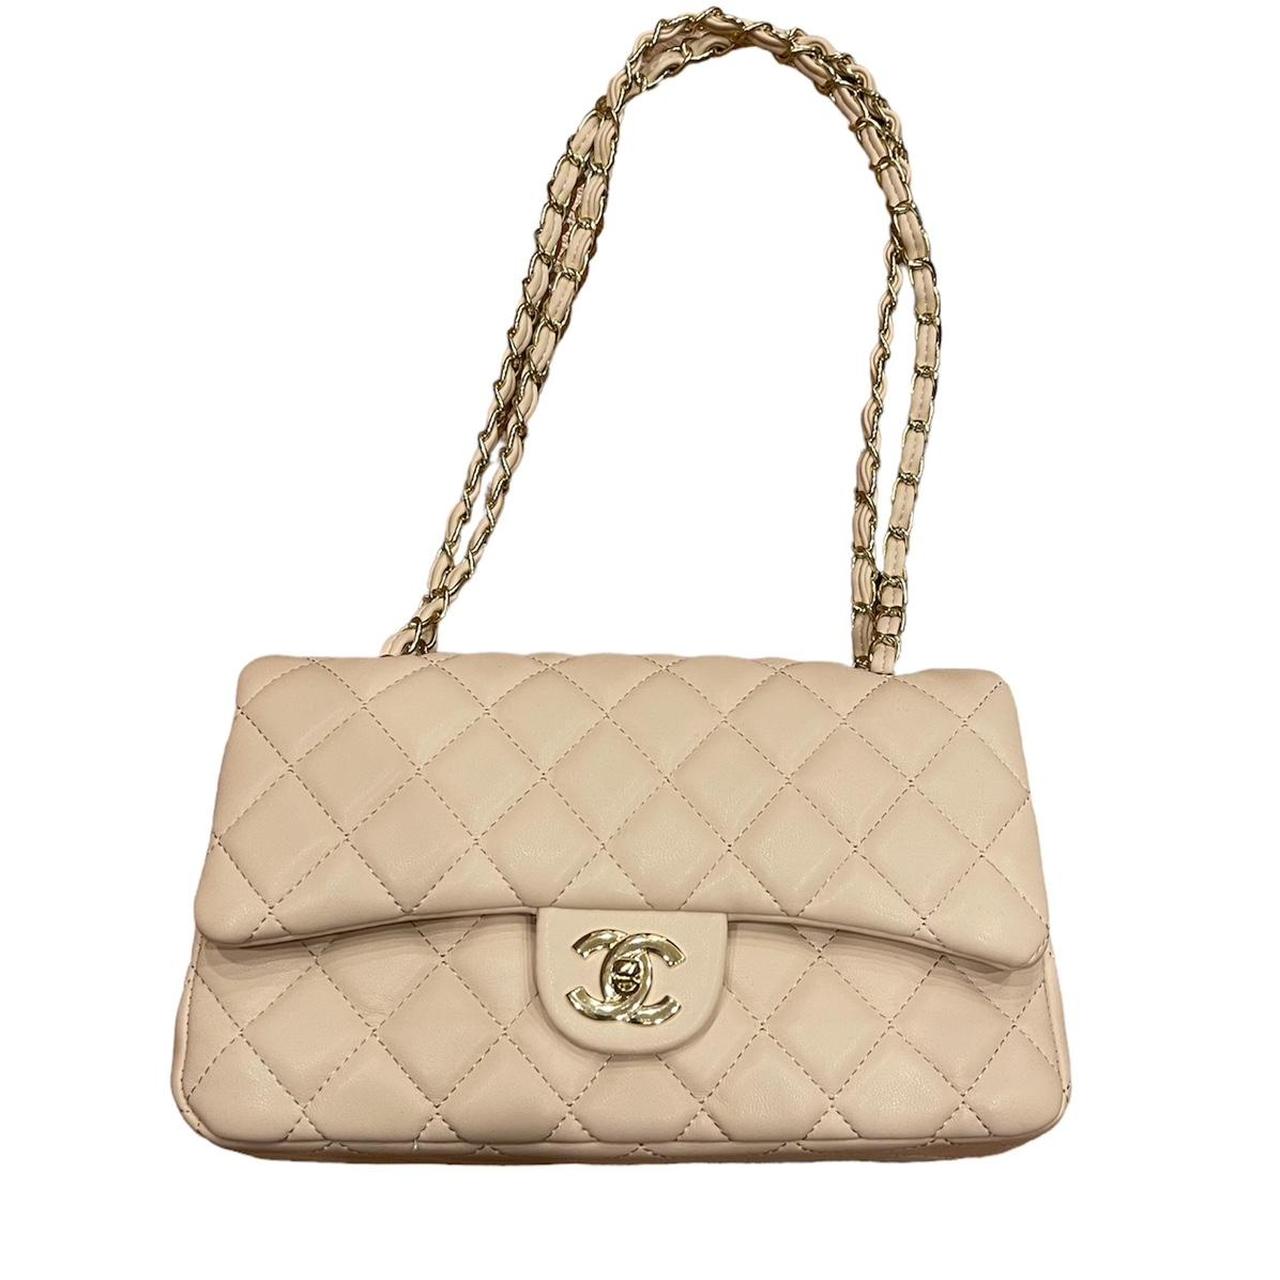 Chanel cream purse - Depop